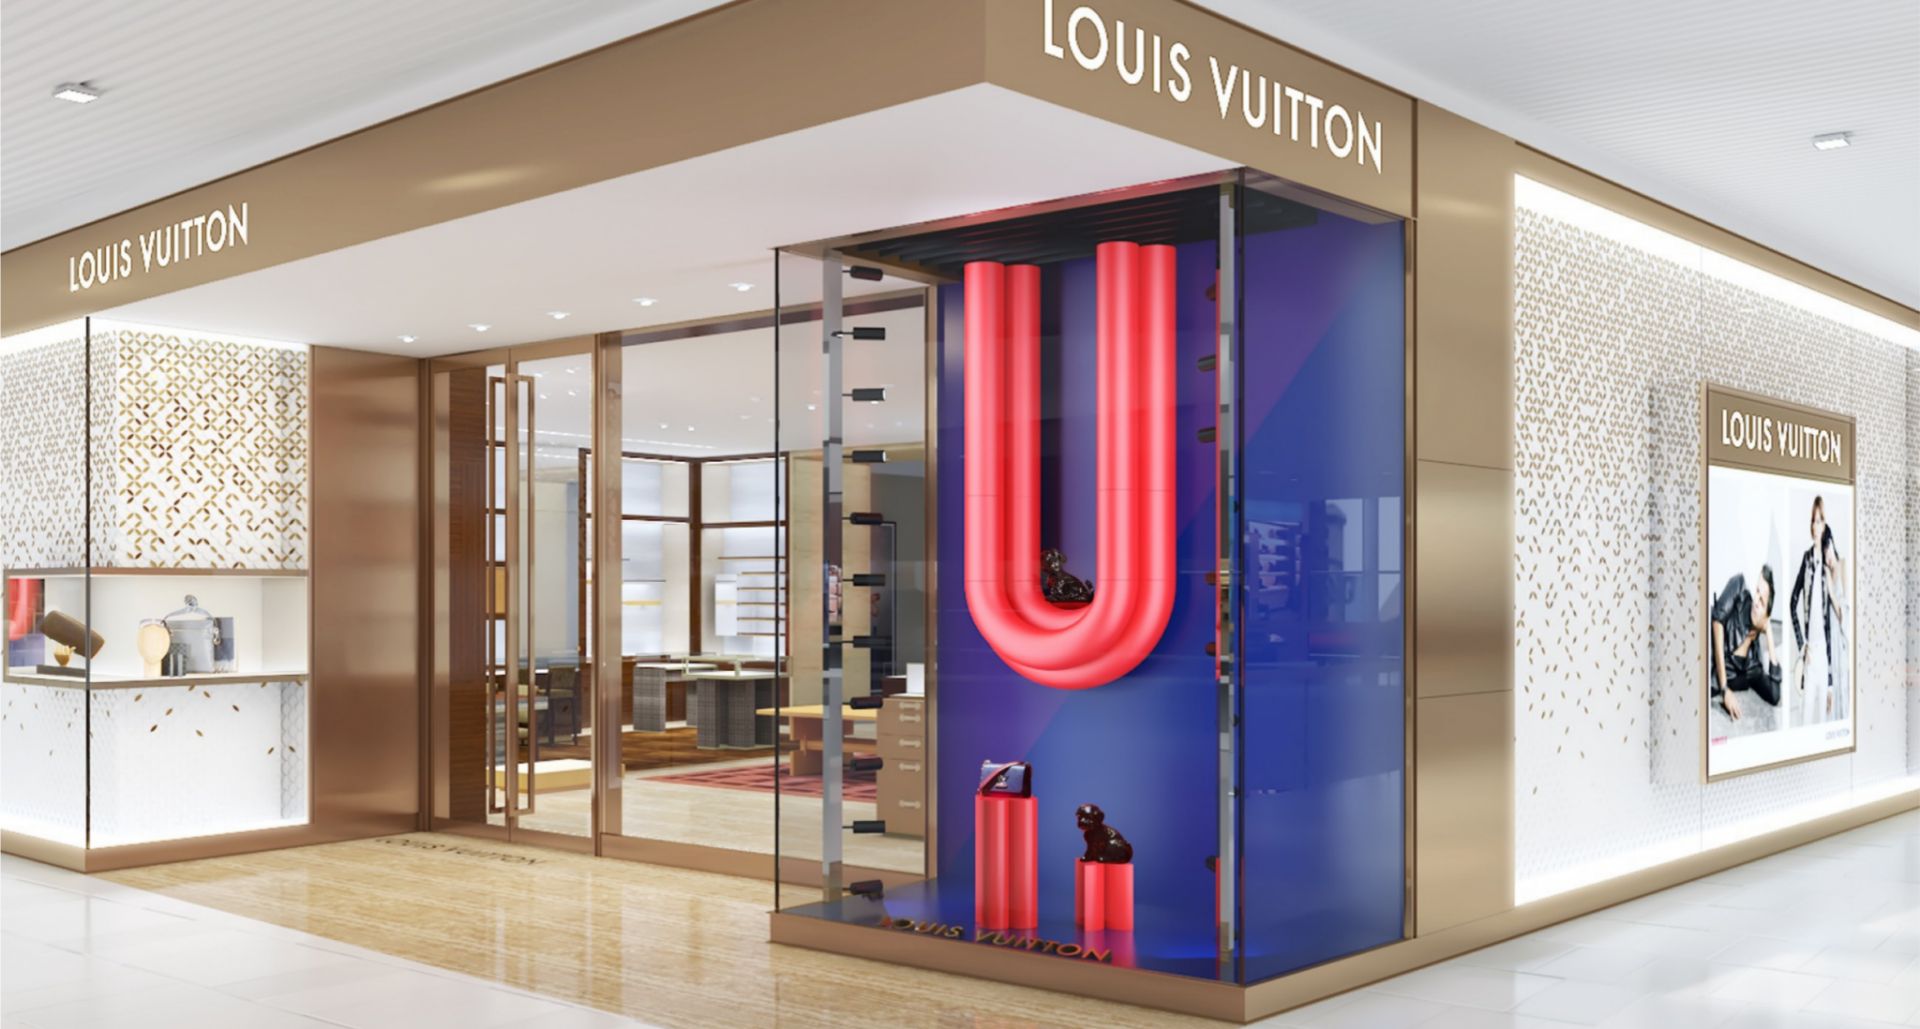 Contact Louis Vuitton Head Office